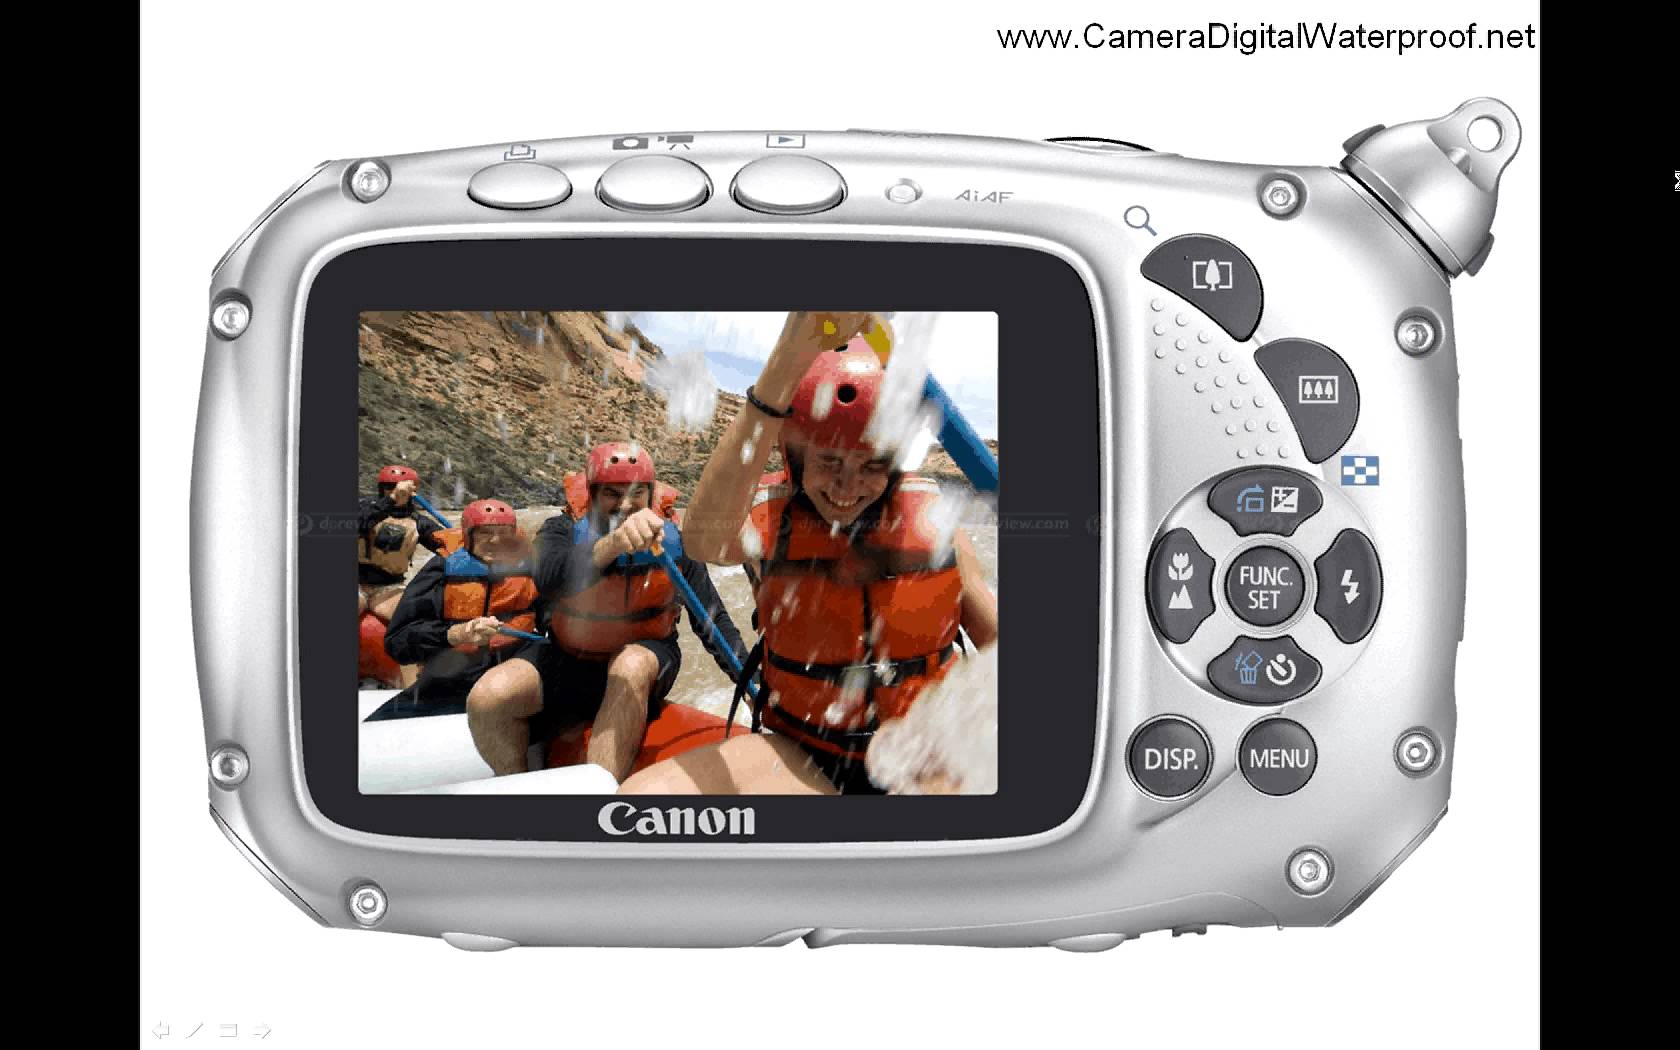 Canon PowerShot D10 Review – Waterproof Digital Camera Review HD